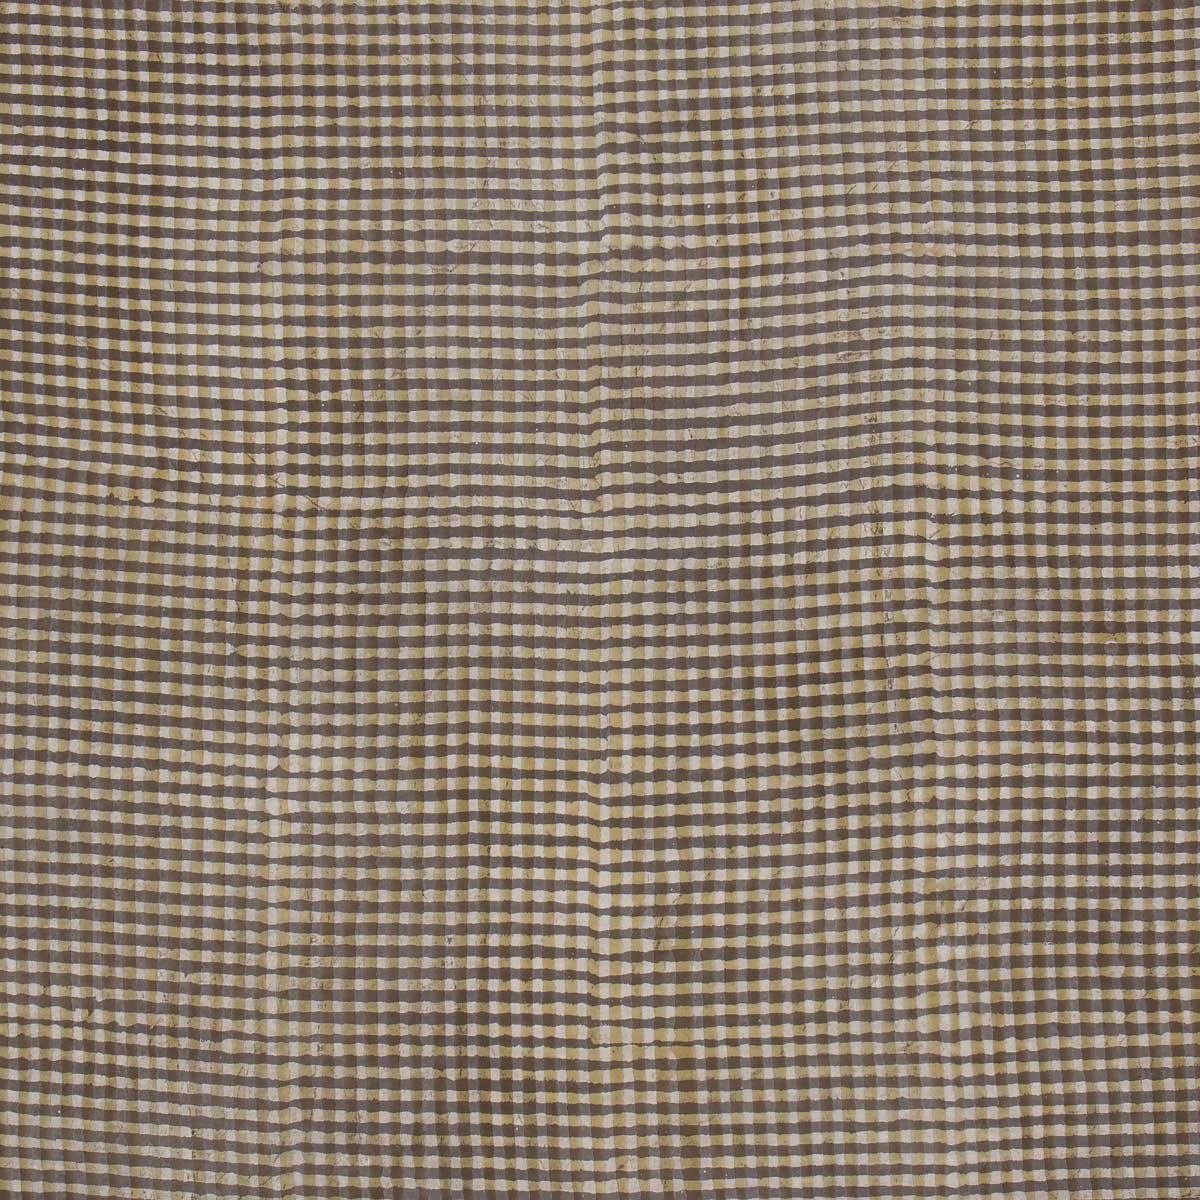 NATURAL HARRY STRIPE Fabric